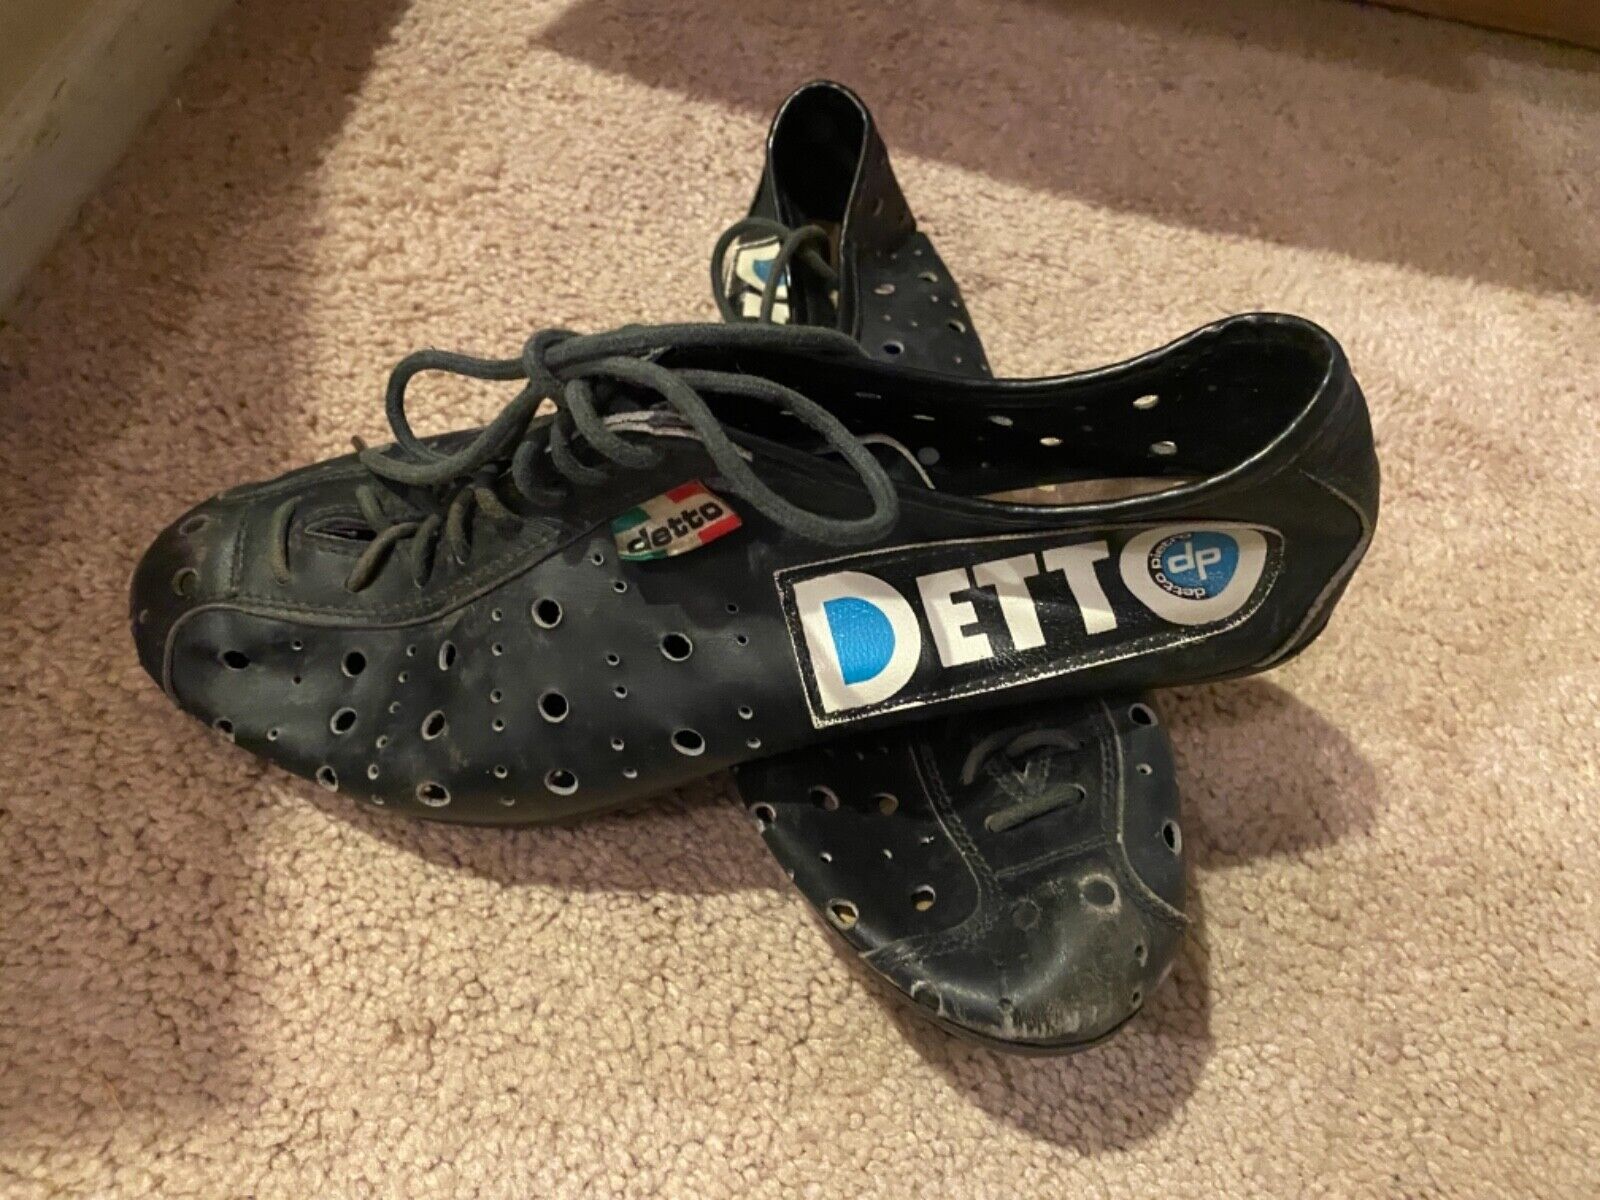 Vintage Black Detto Pietro Cycling Shoes Size 40